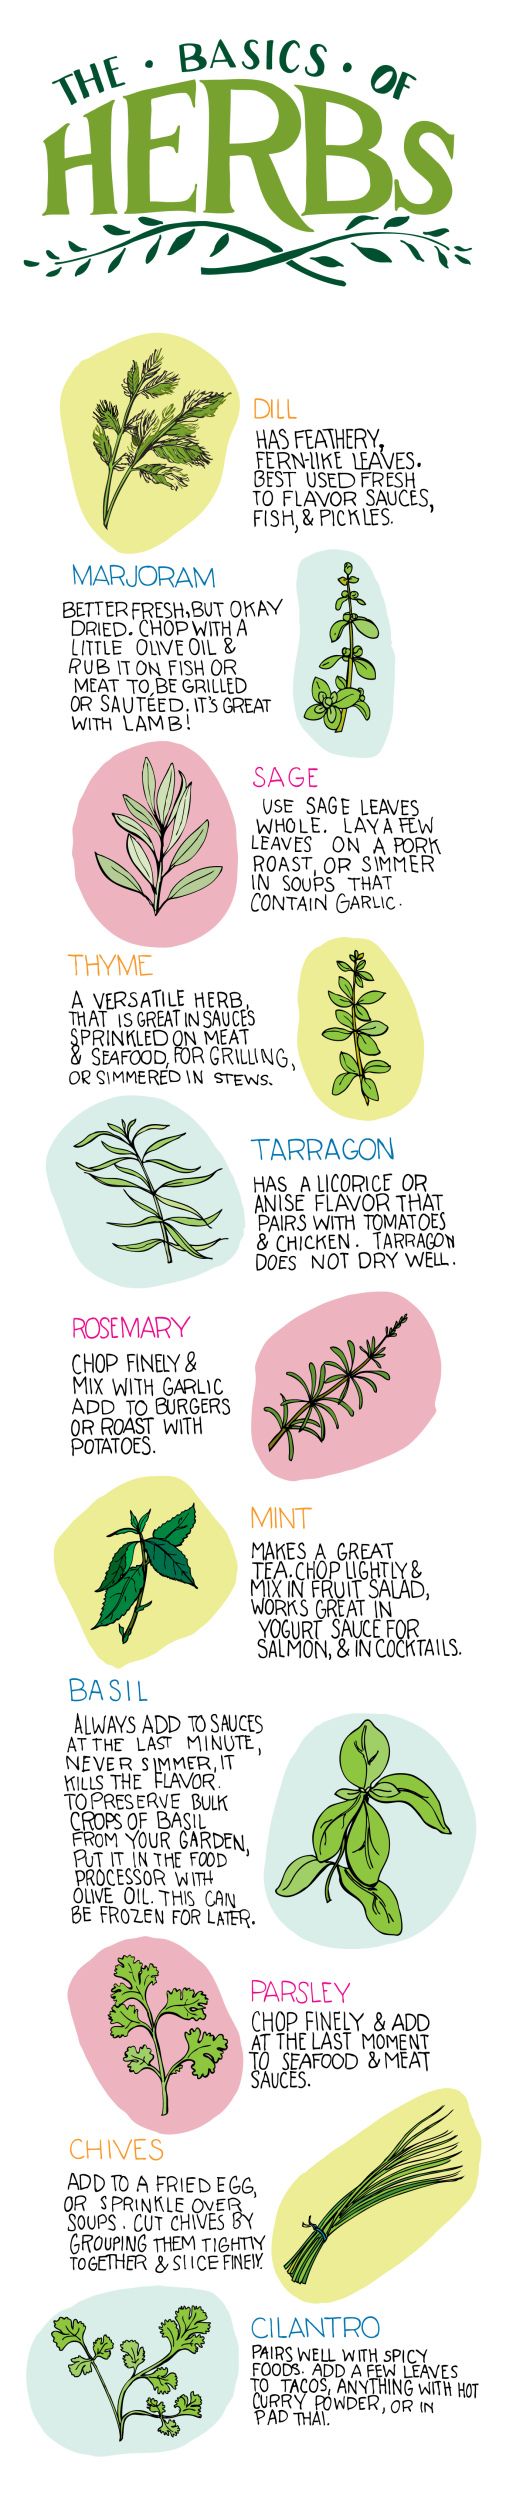 The Basics of Herbs